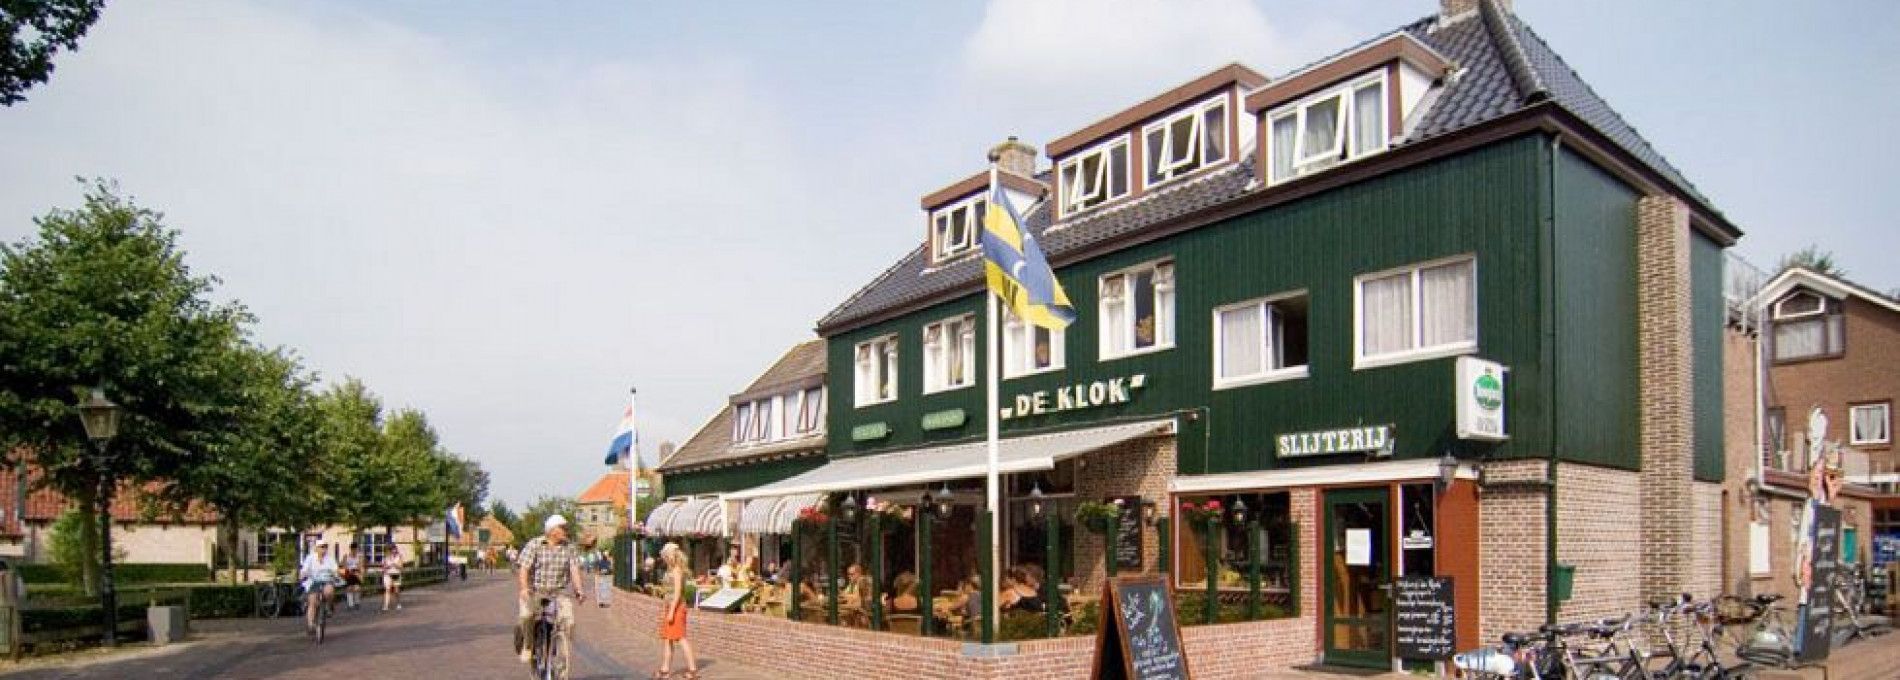 Hotel restaurant De Klok - Tourist Information “VVV” Ameland